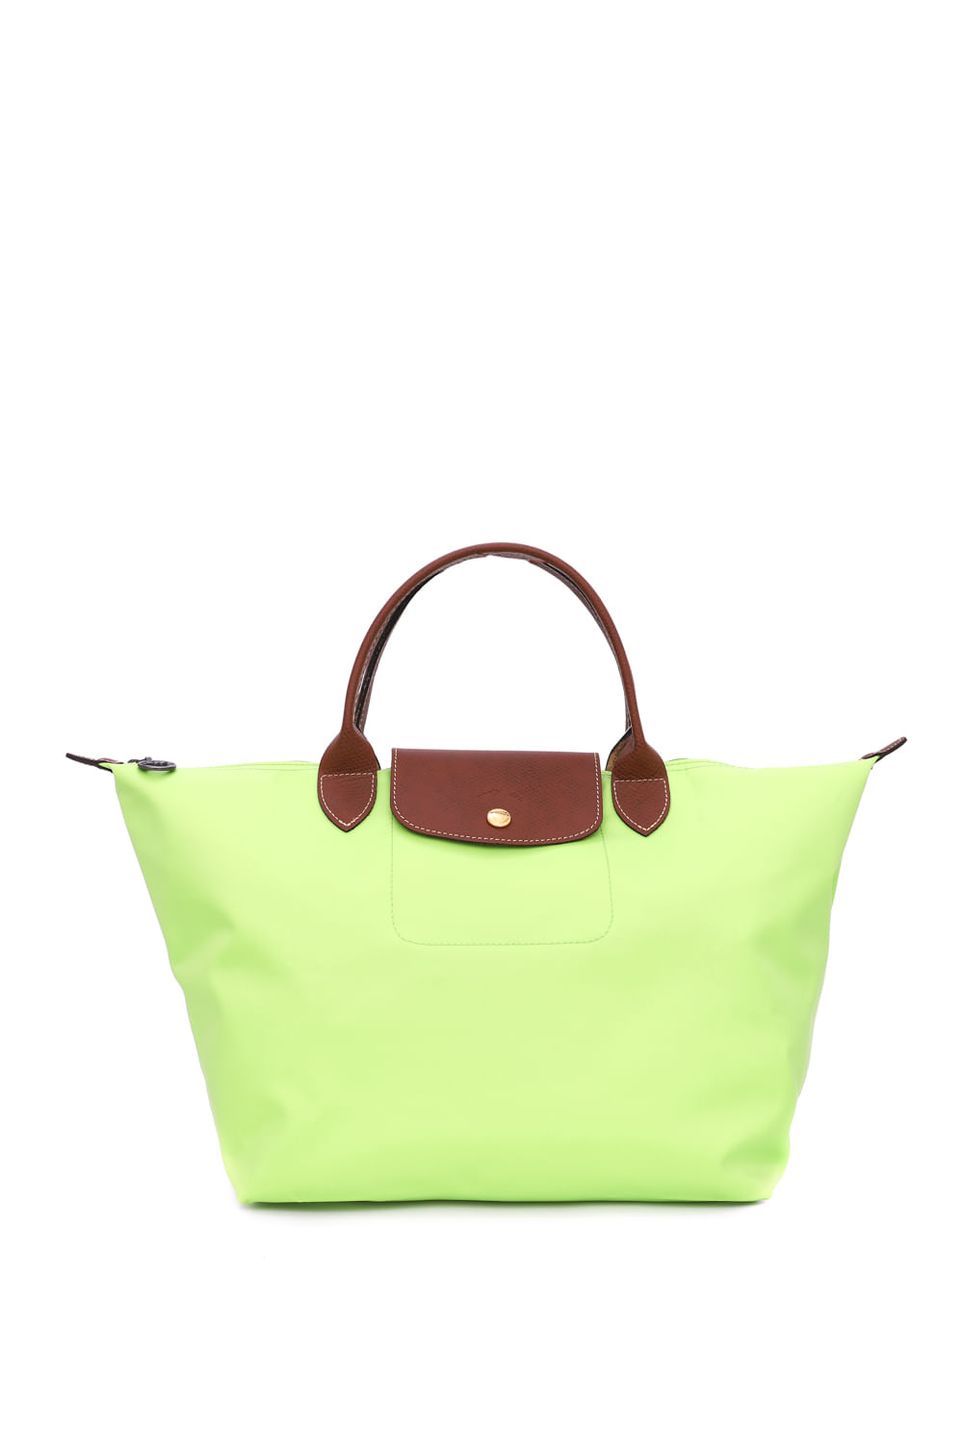 Longchamp Le Pliage Original Small Handbag in Lichen Green